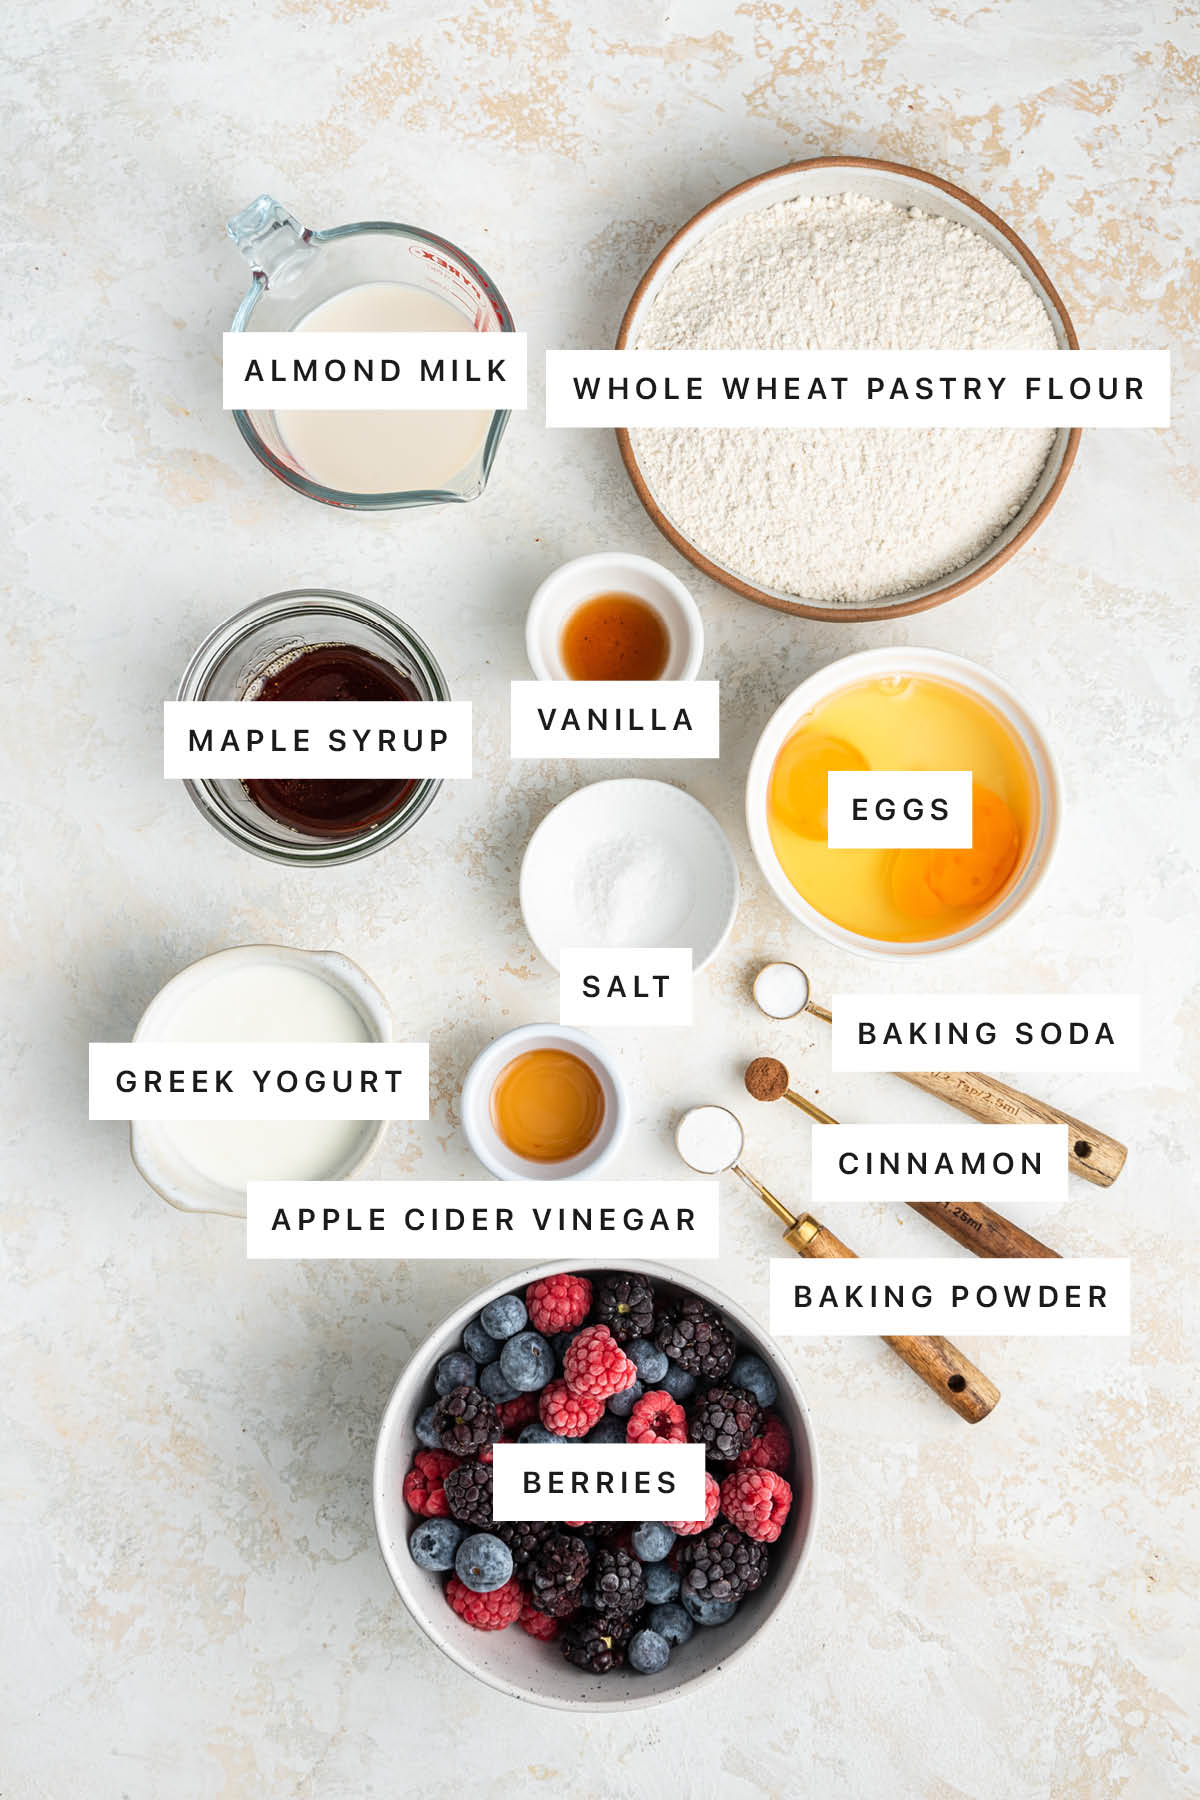 Ingredients measured out to make Easy Berry Cake: almond milk, whole wheat pastry flour, maple syrup, vanilla, eggs, salt, Greek yogurt, apple cider vinegar, baking soda, cinnamon, baking powder and berries.